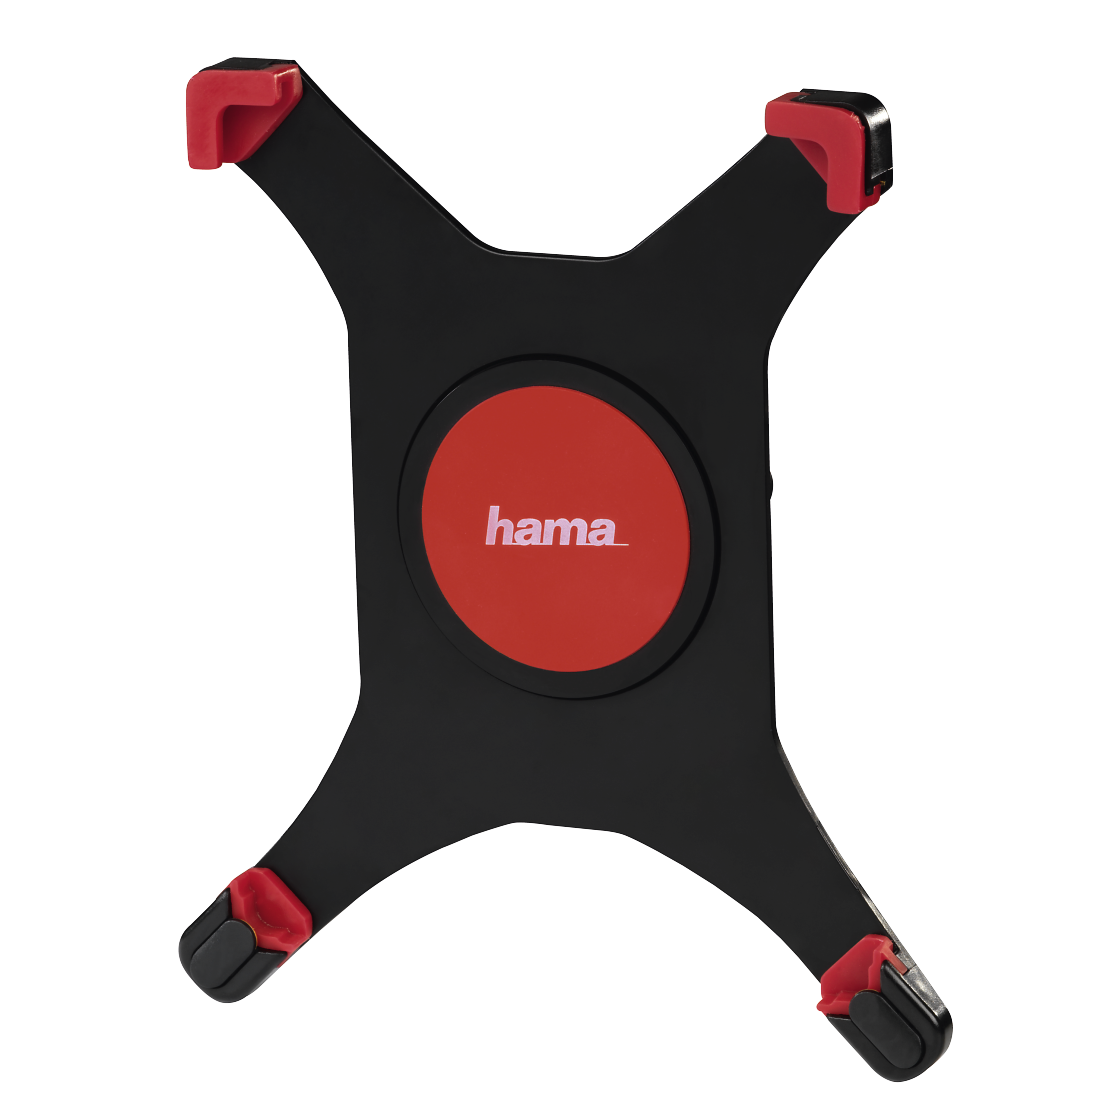 00108705 Hama Adapter for iPad, VESA 75x75